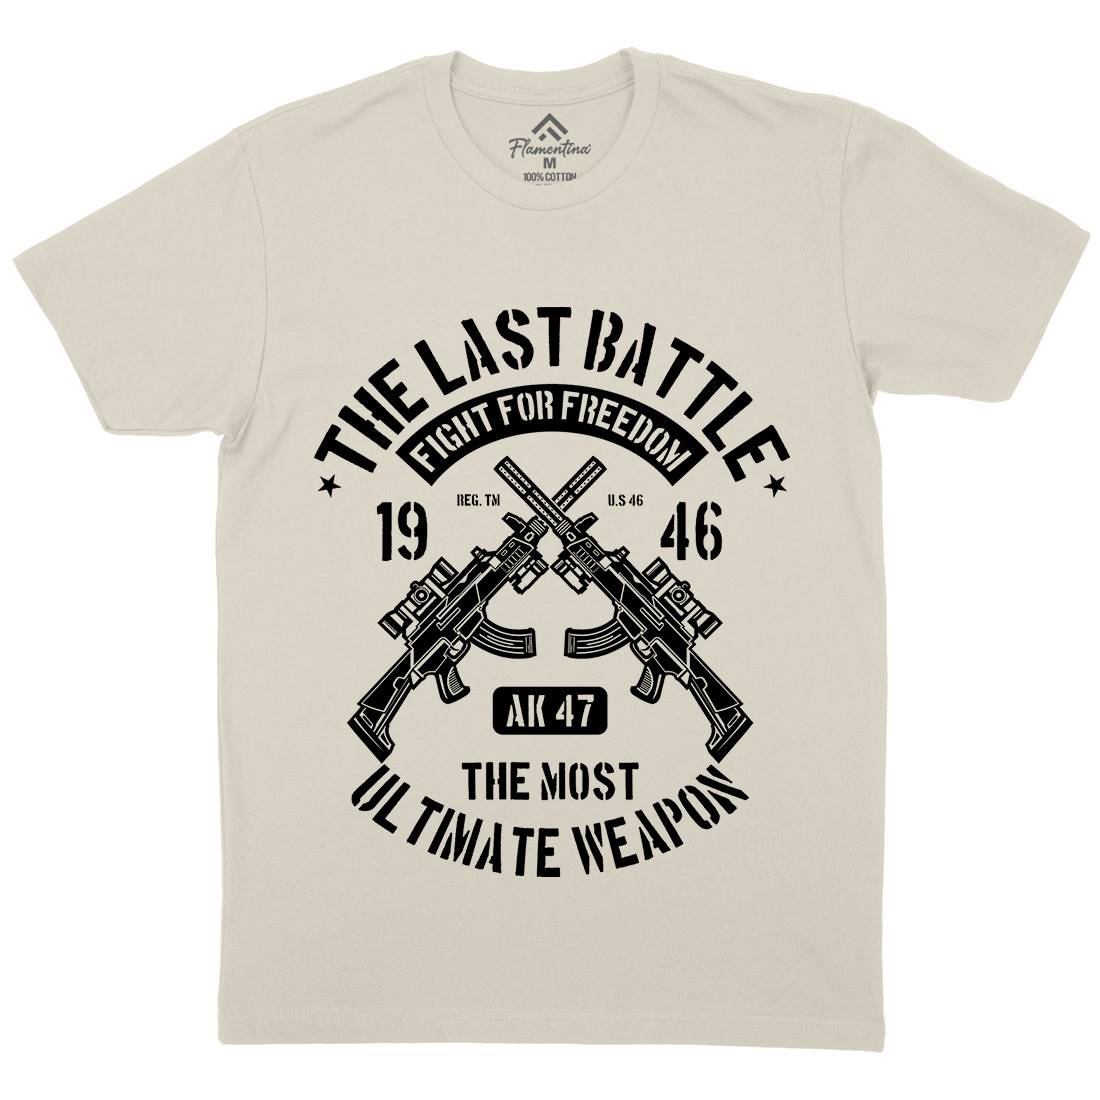 Last Battle Mens Organic Crew Neck T-Shirt Army A174